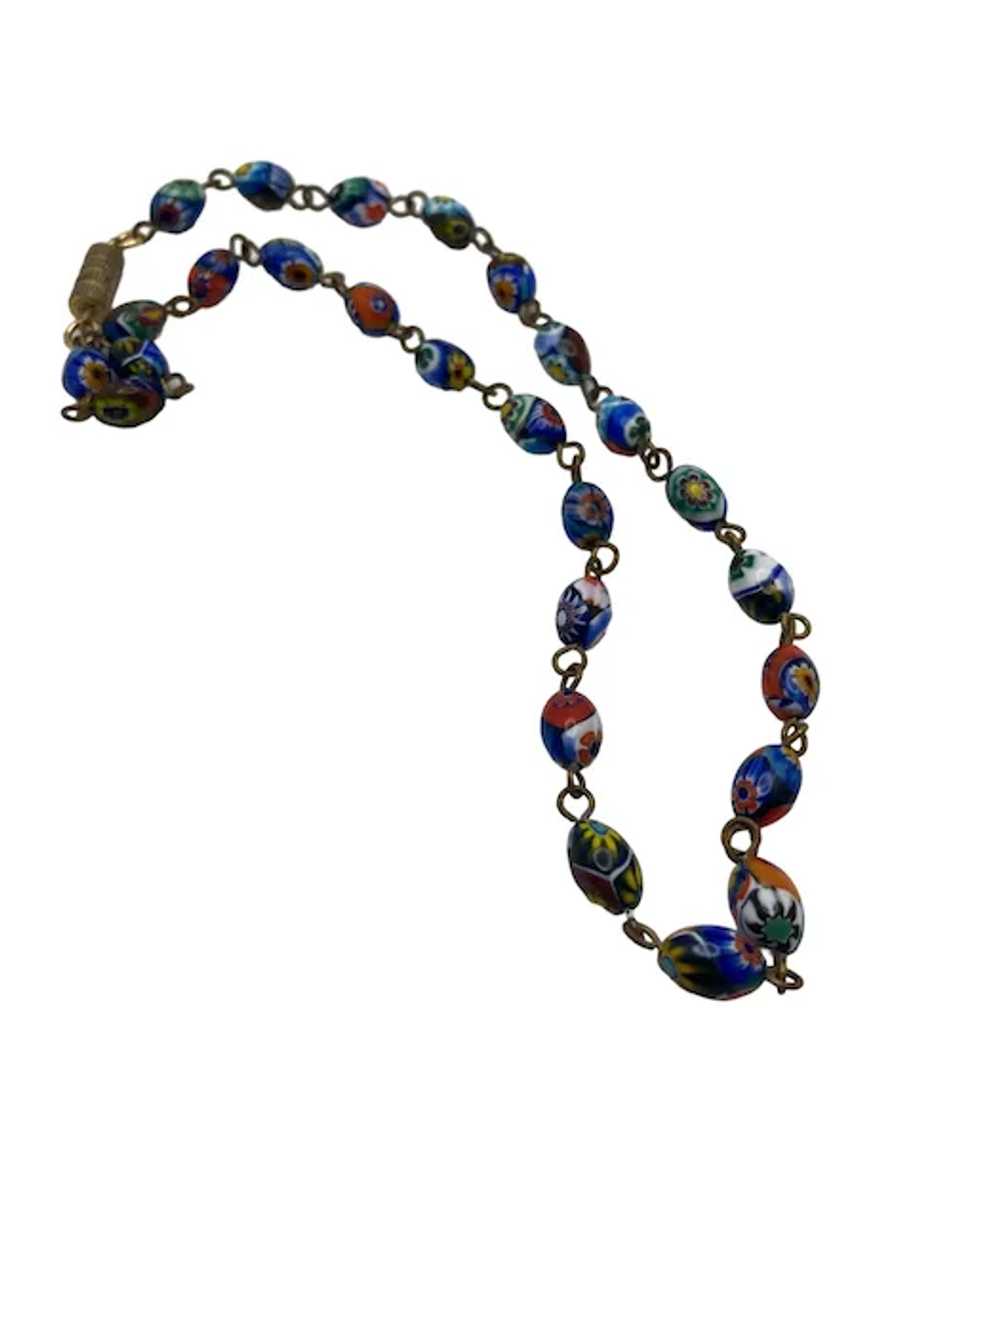 Italian Millefiori Glass Bead Necklace - image 2